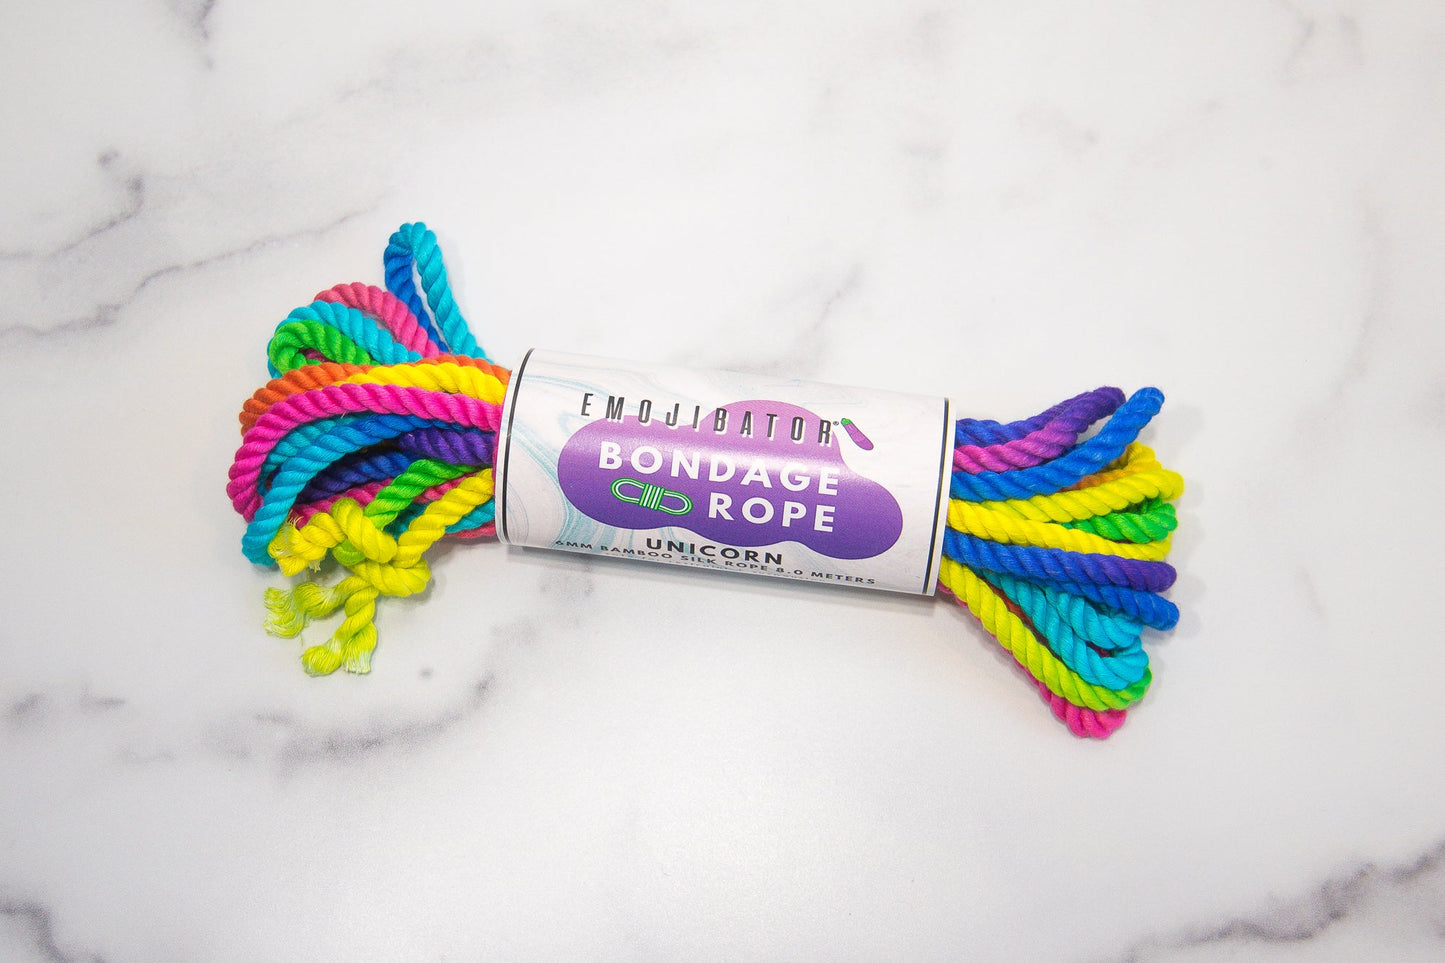 Unicorn Rainbow Bondage Rope by Emojibator